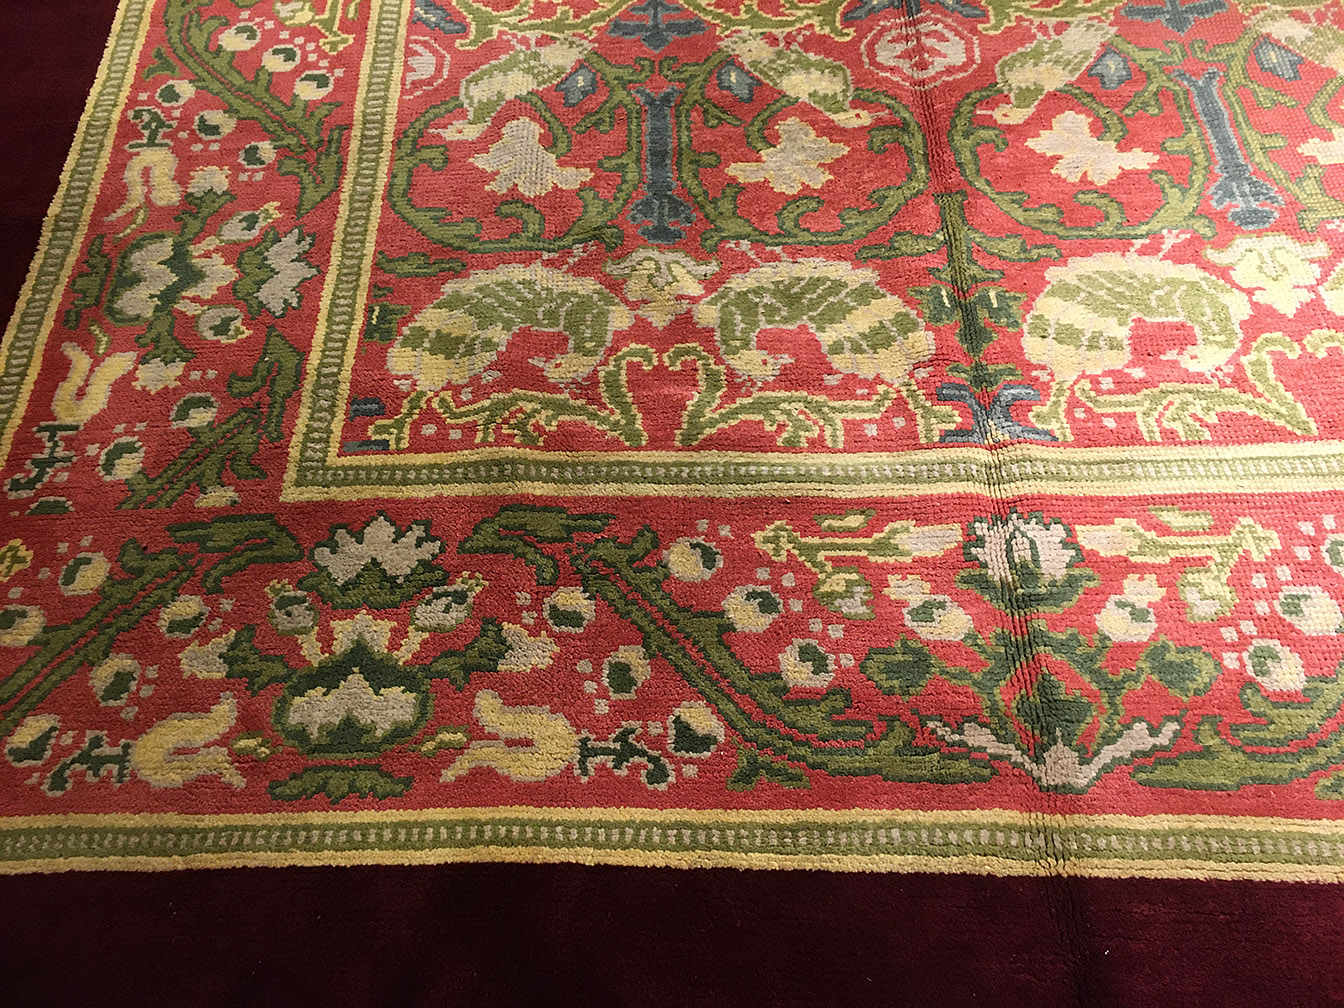 Vintage cuenca Carpet - # 54687